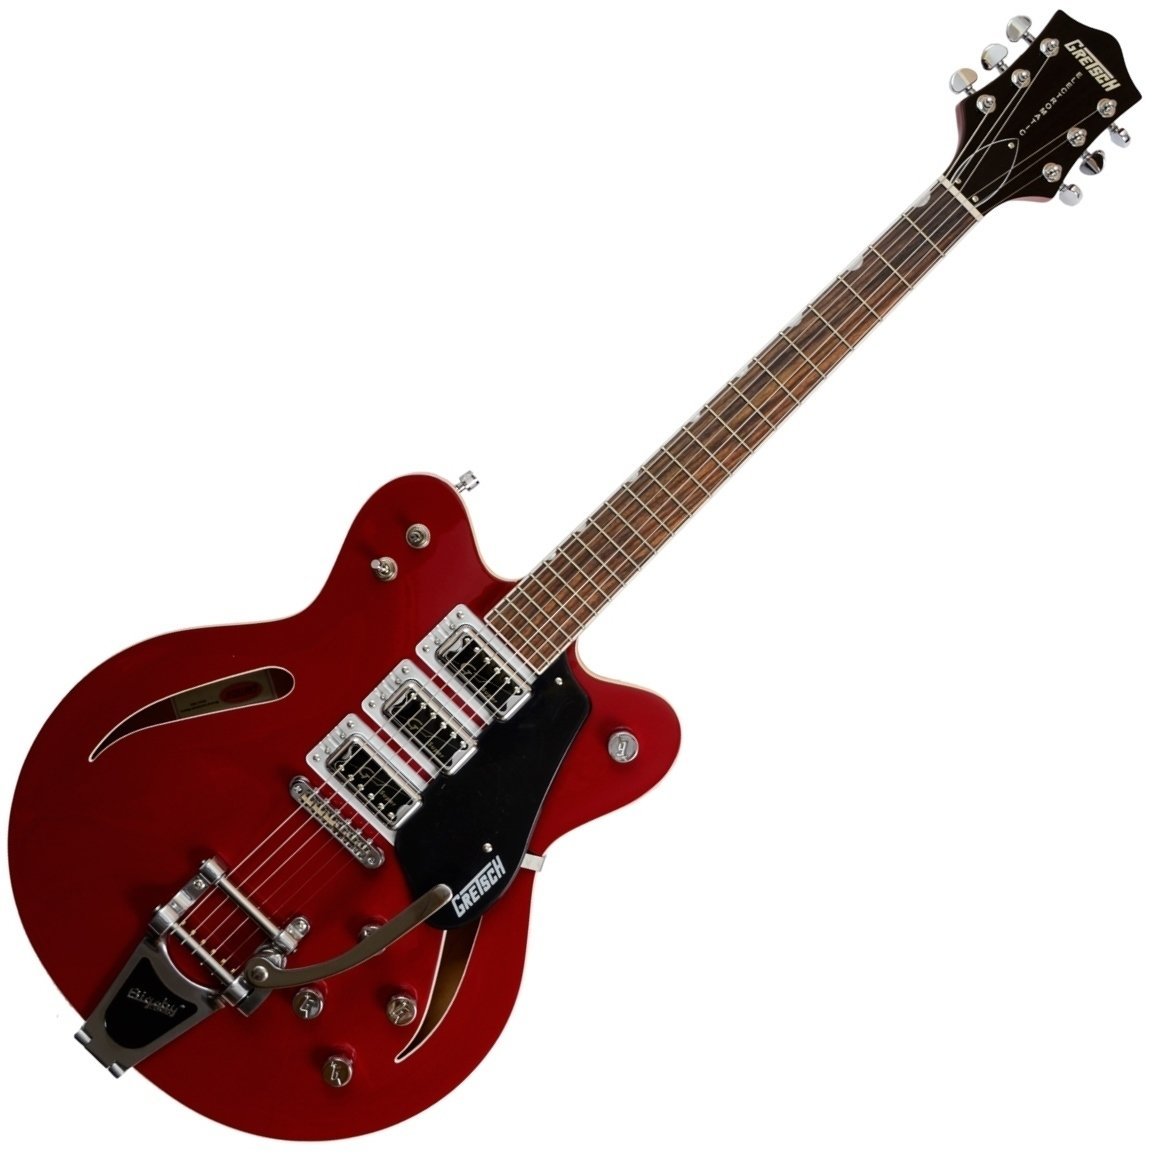 Semiakustická kytara Gretsch G5622T-CB Electromatic Rosa Red